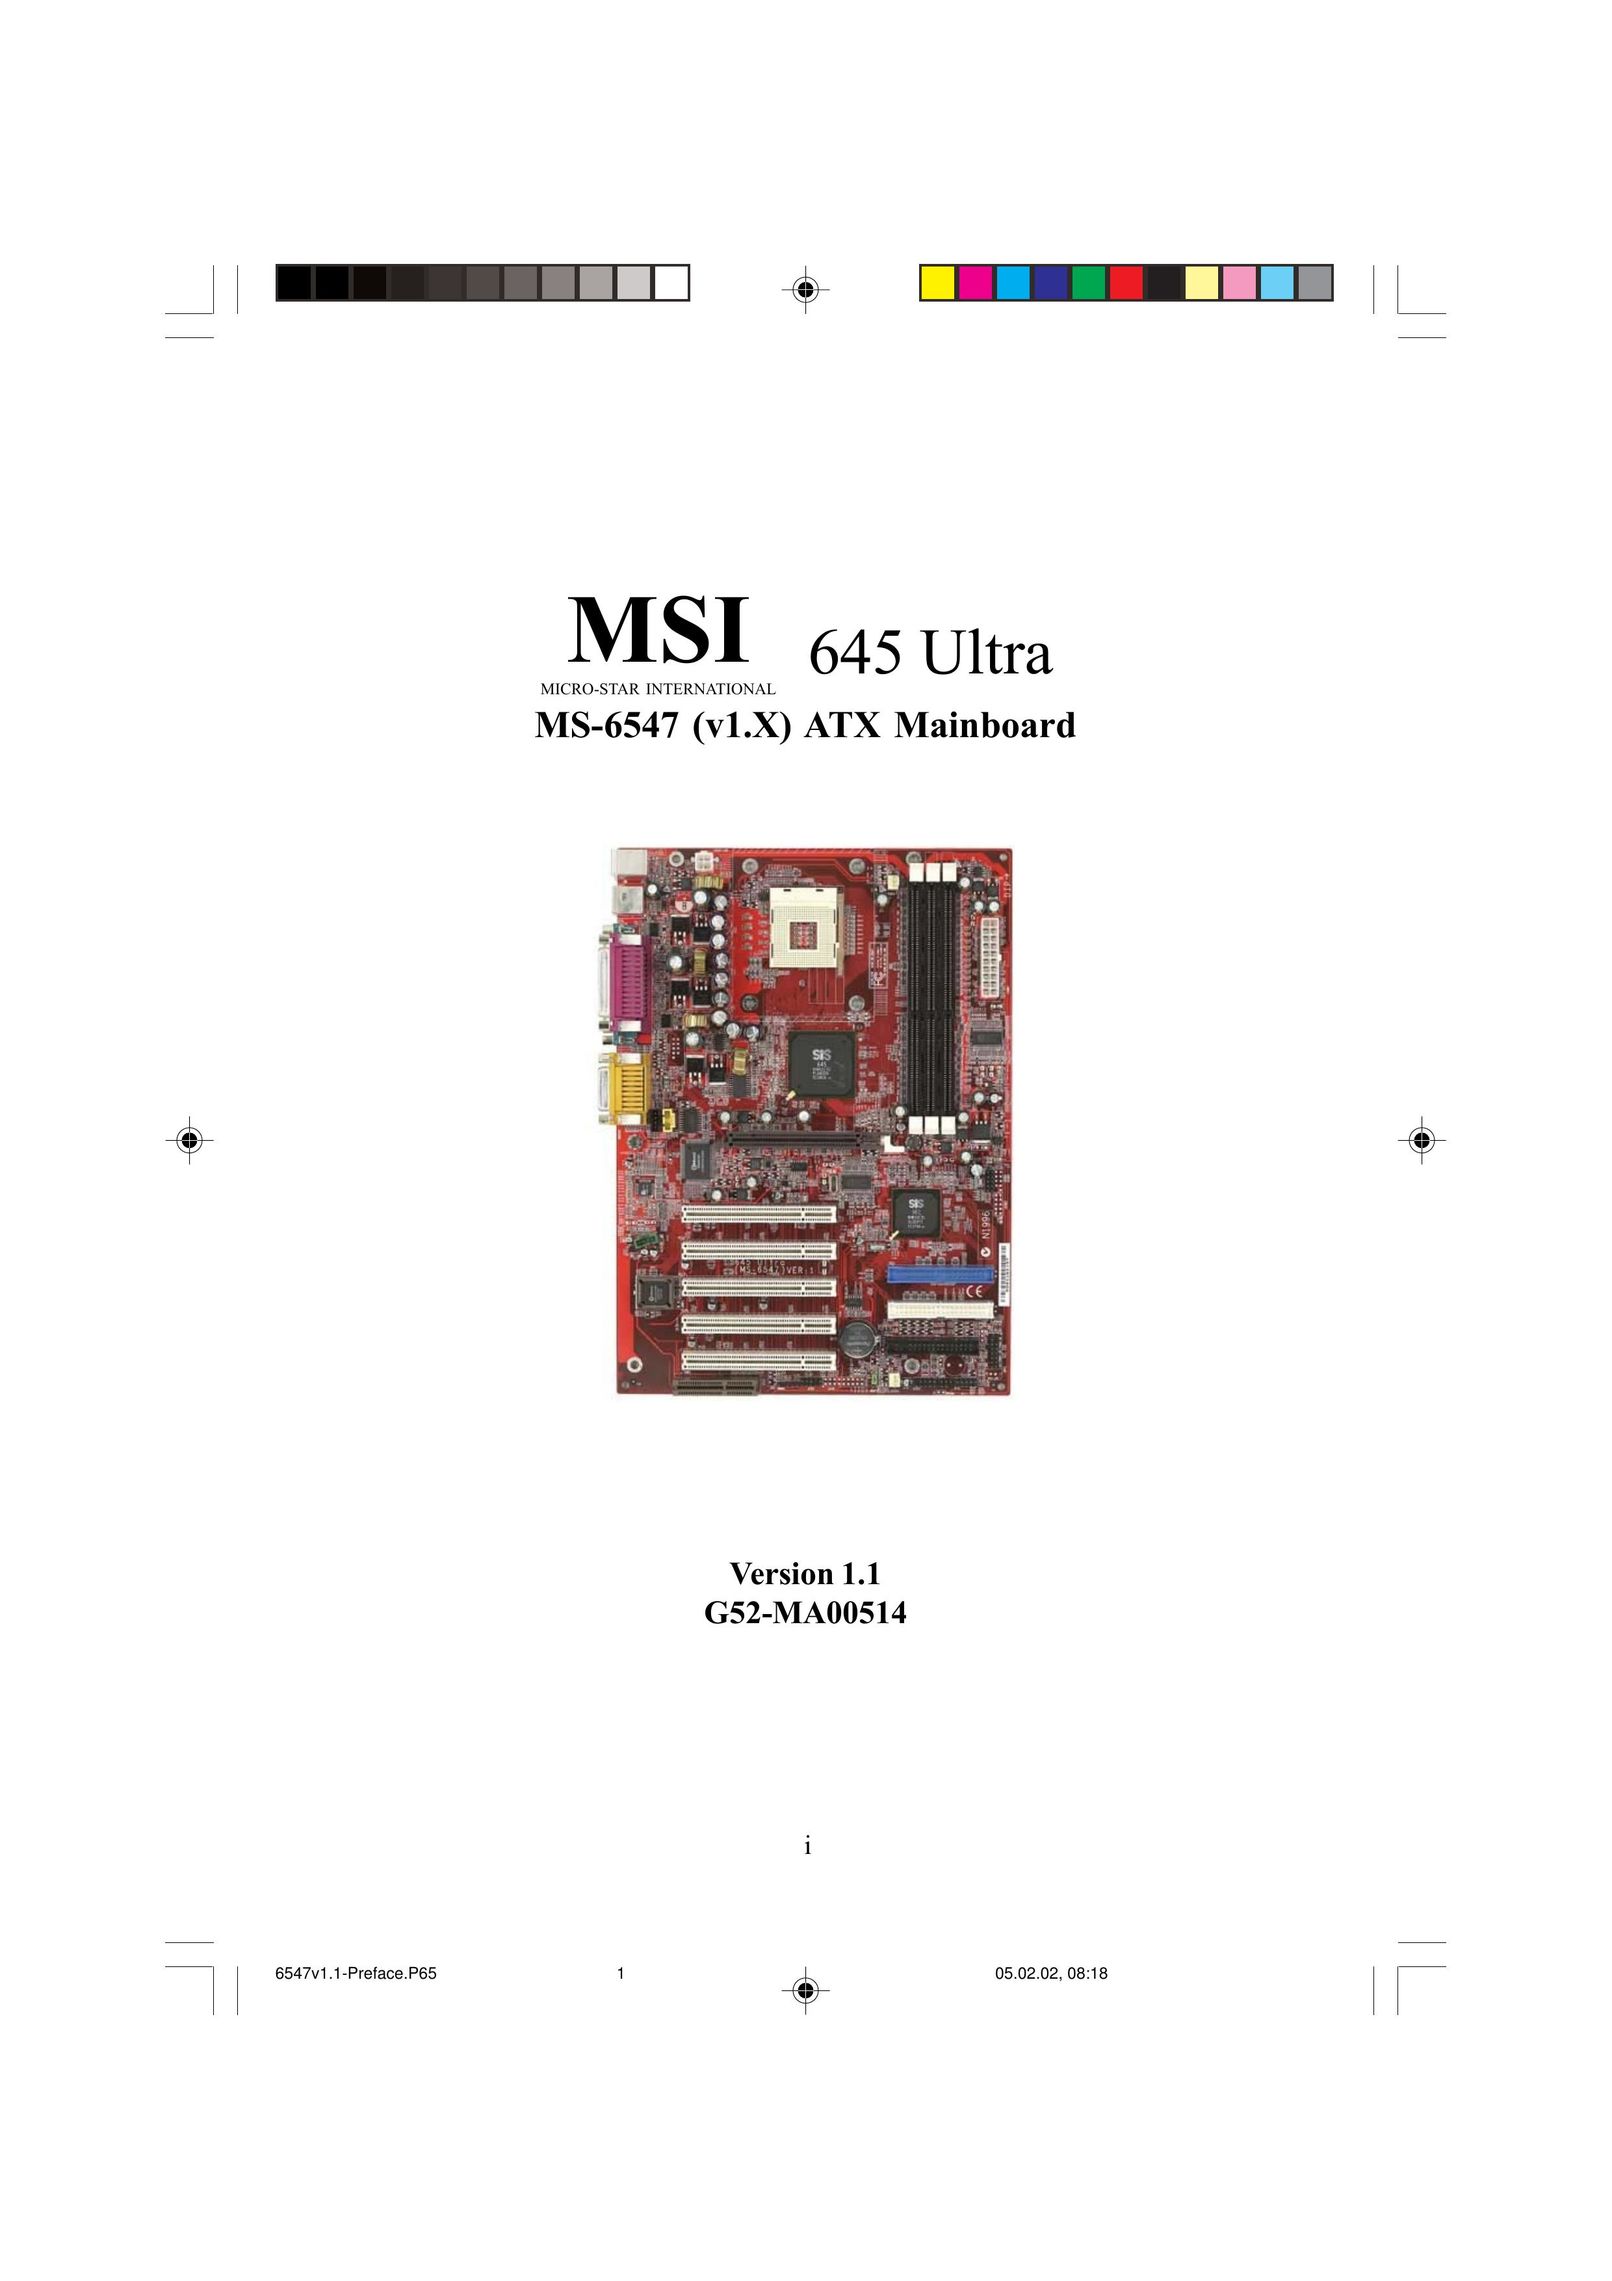 Microstar G52-MA00514 Computer Hardware User Manual